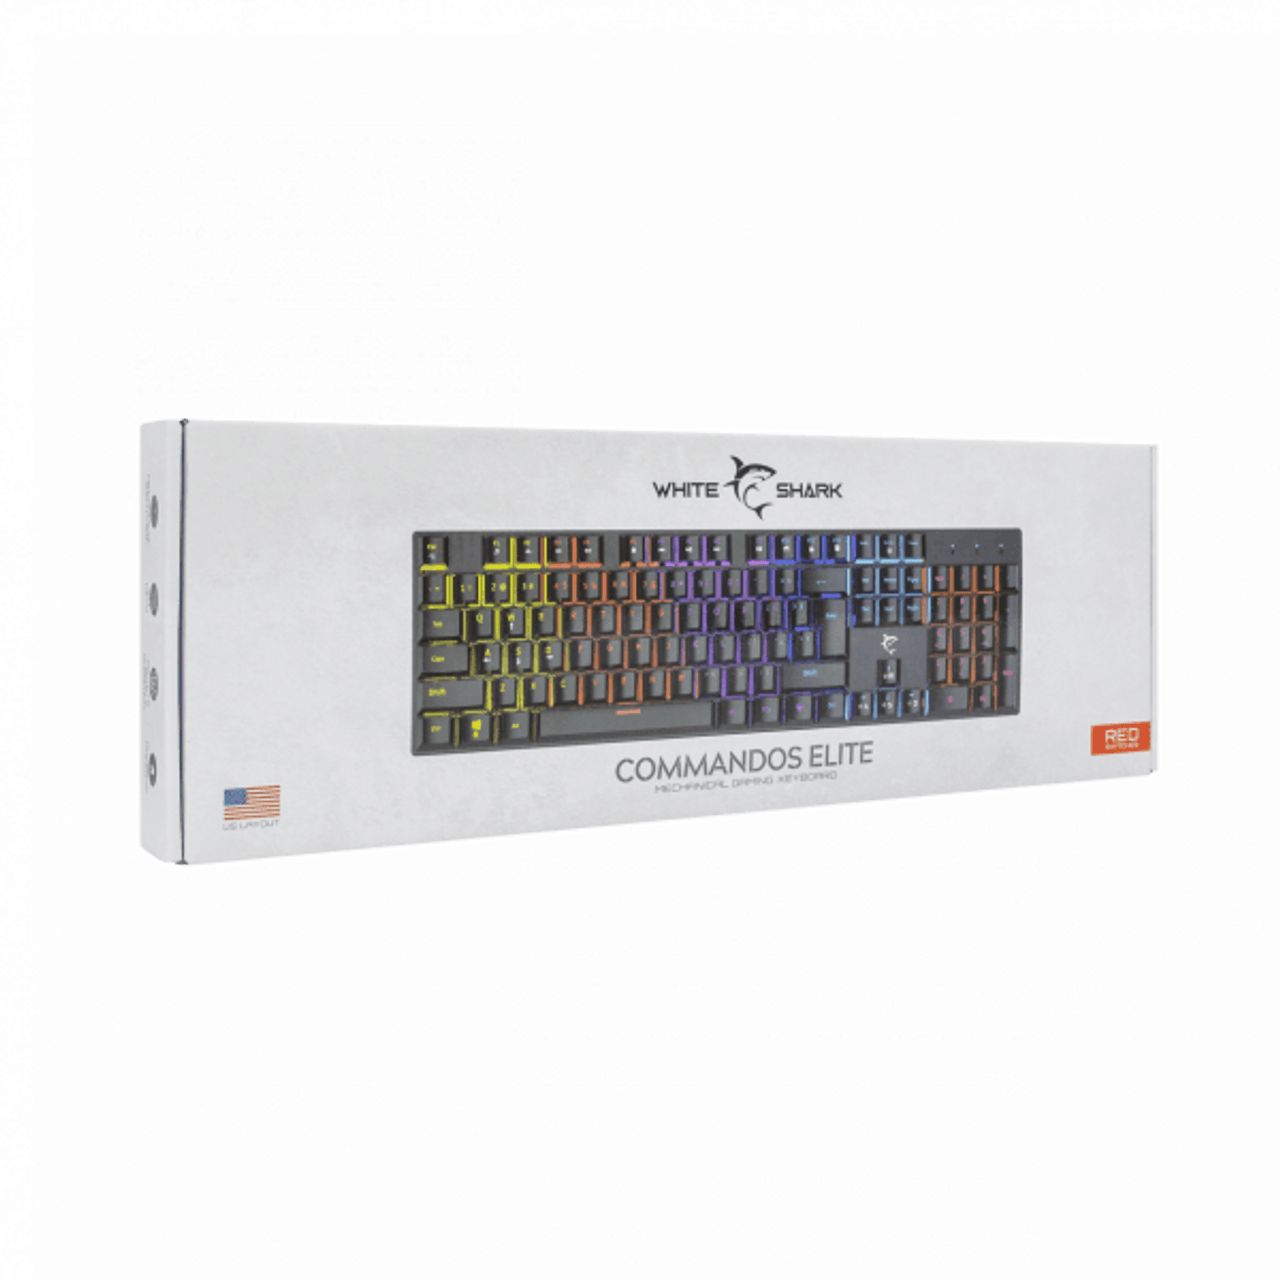 White Shark Keyboard GK-2107 COMMANDOS ELITE - Mehanicka / US - RED SW -  Electron Albania